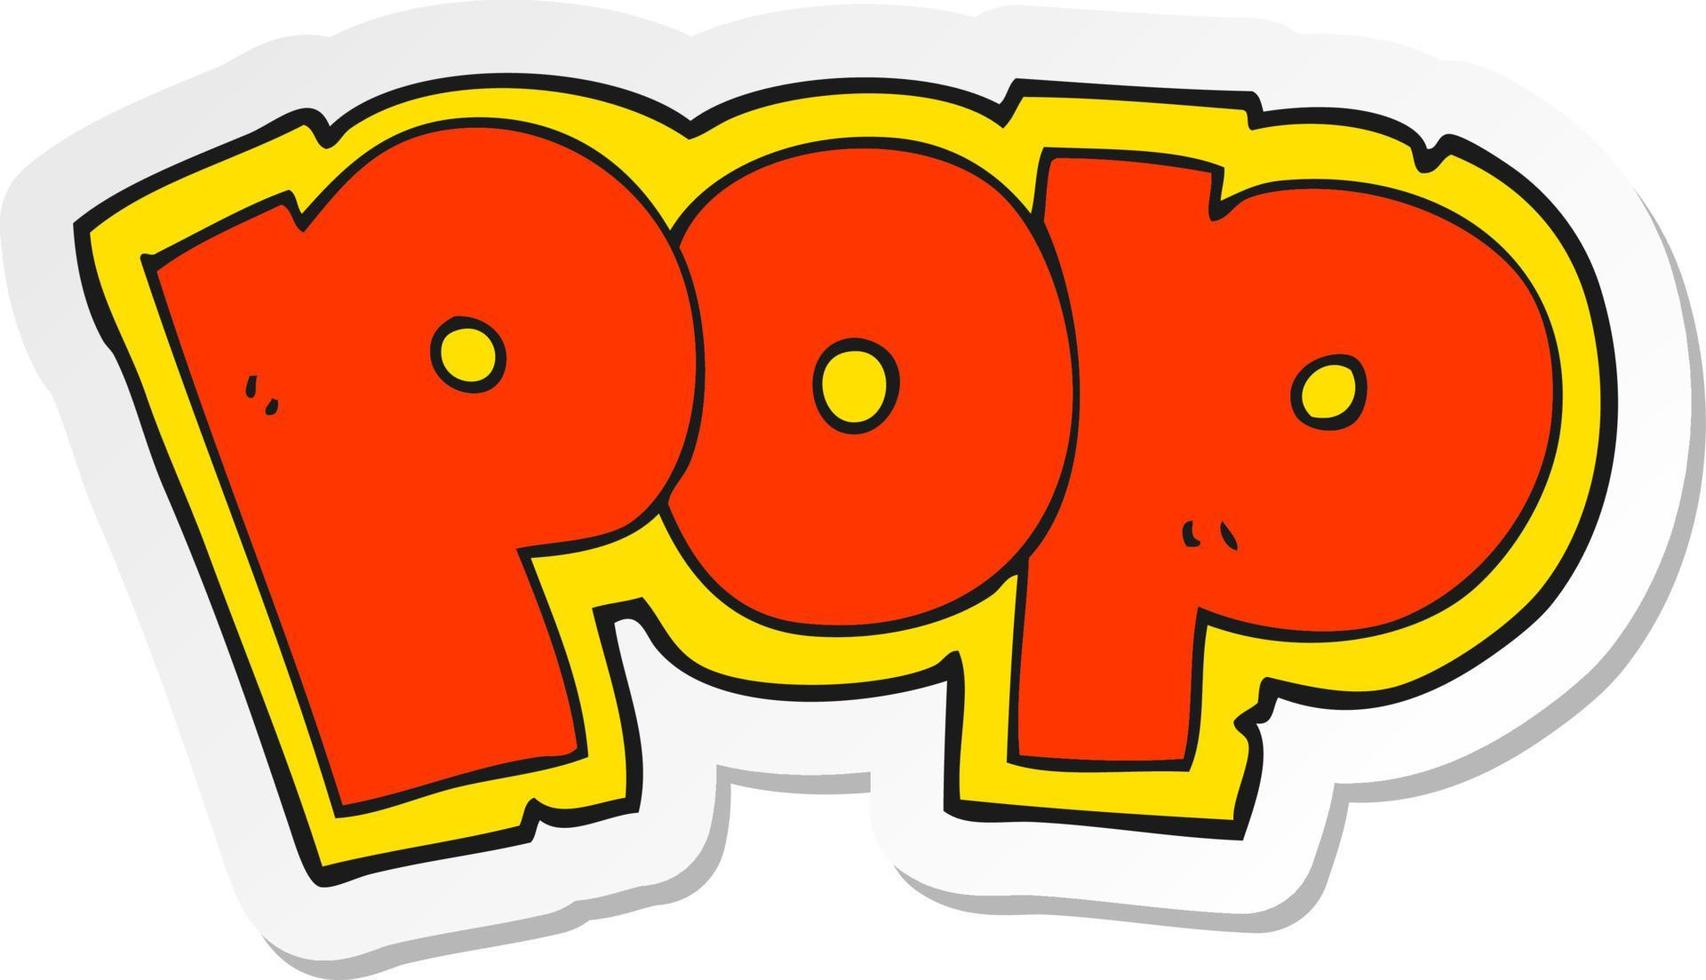 sticker of a cartoon POP symbol vector